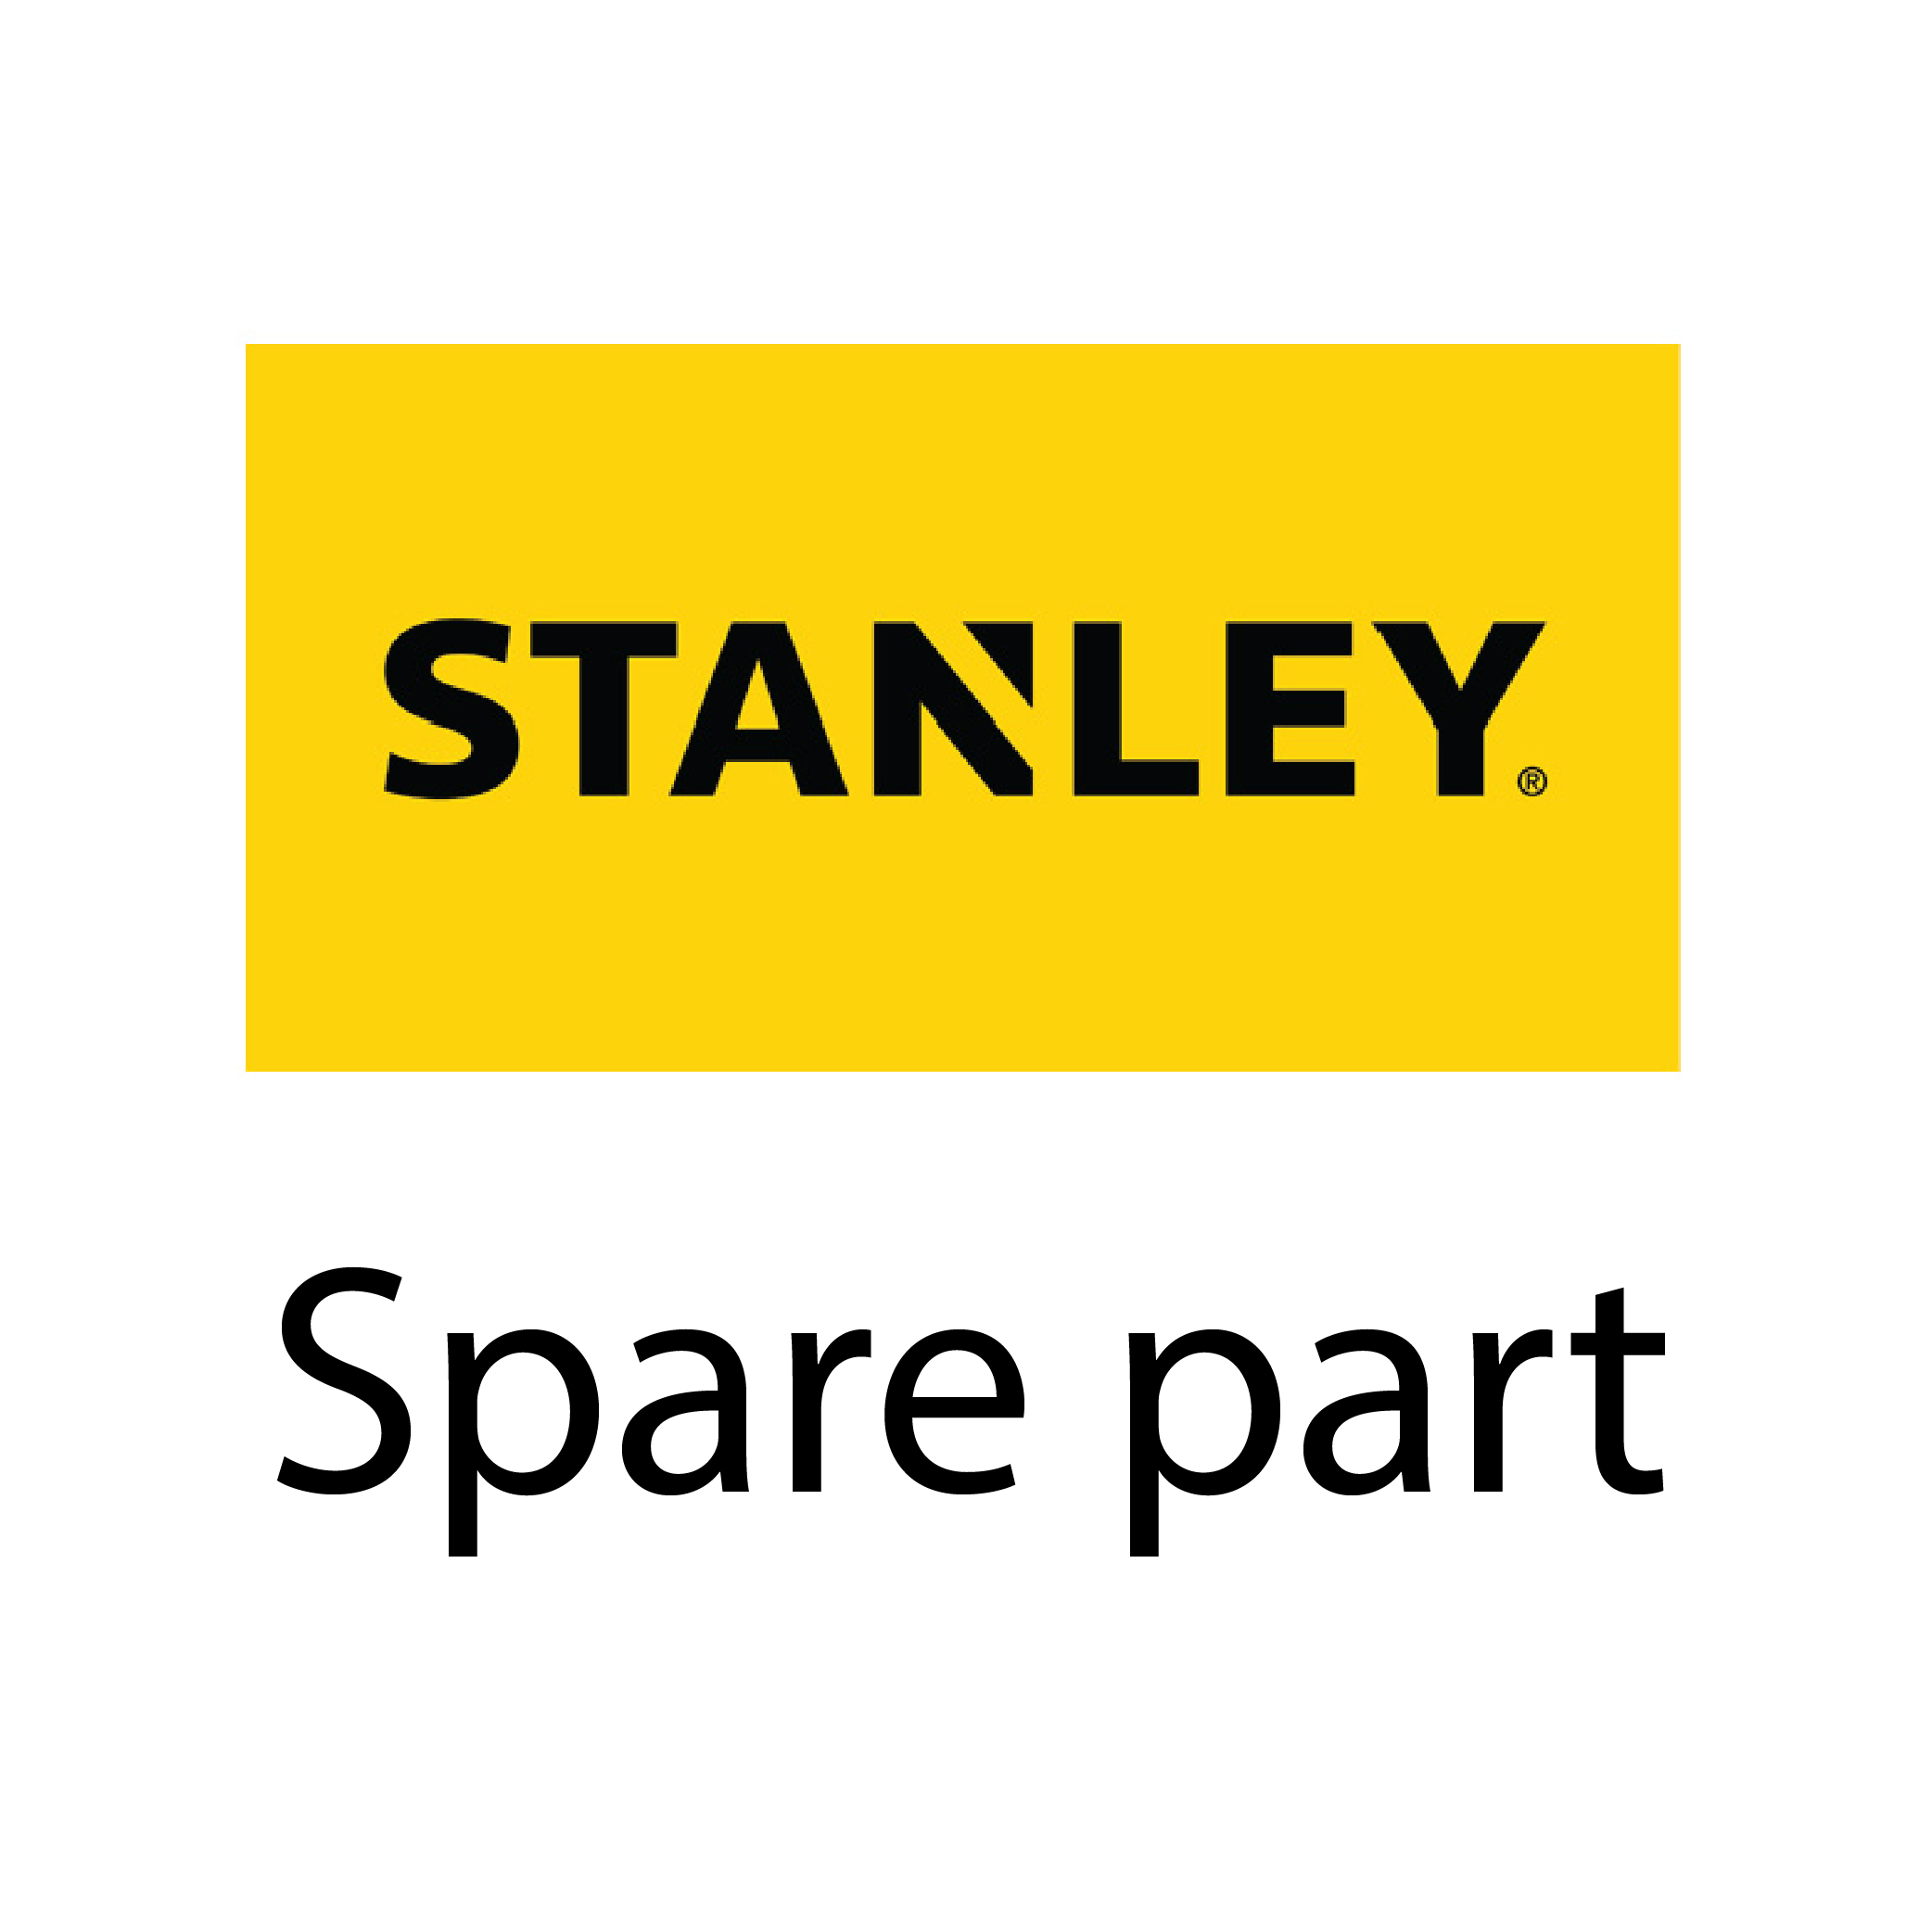 SKI - สกี จำหน่ายสินค้าหลากหลาย และคุณภาพดี | STANLEY #90592489 ทุ่น STEL503